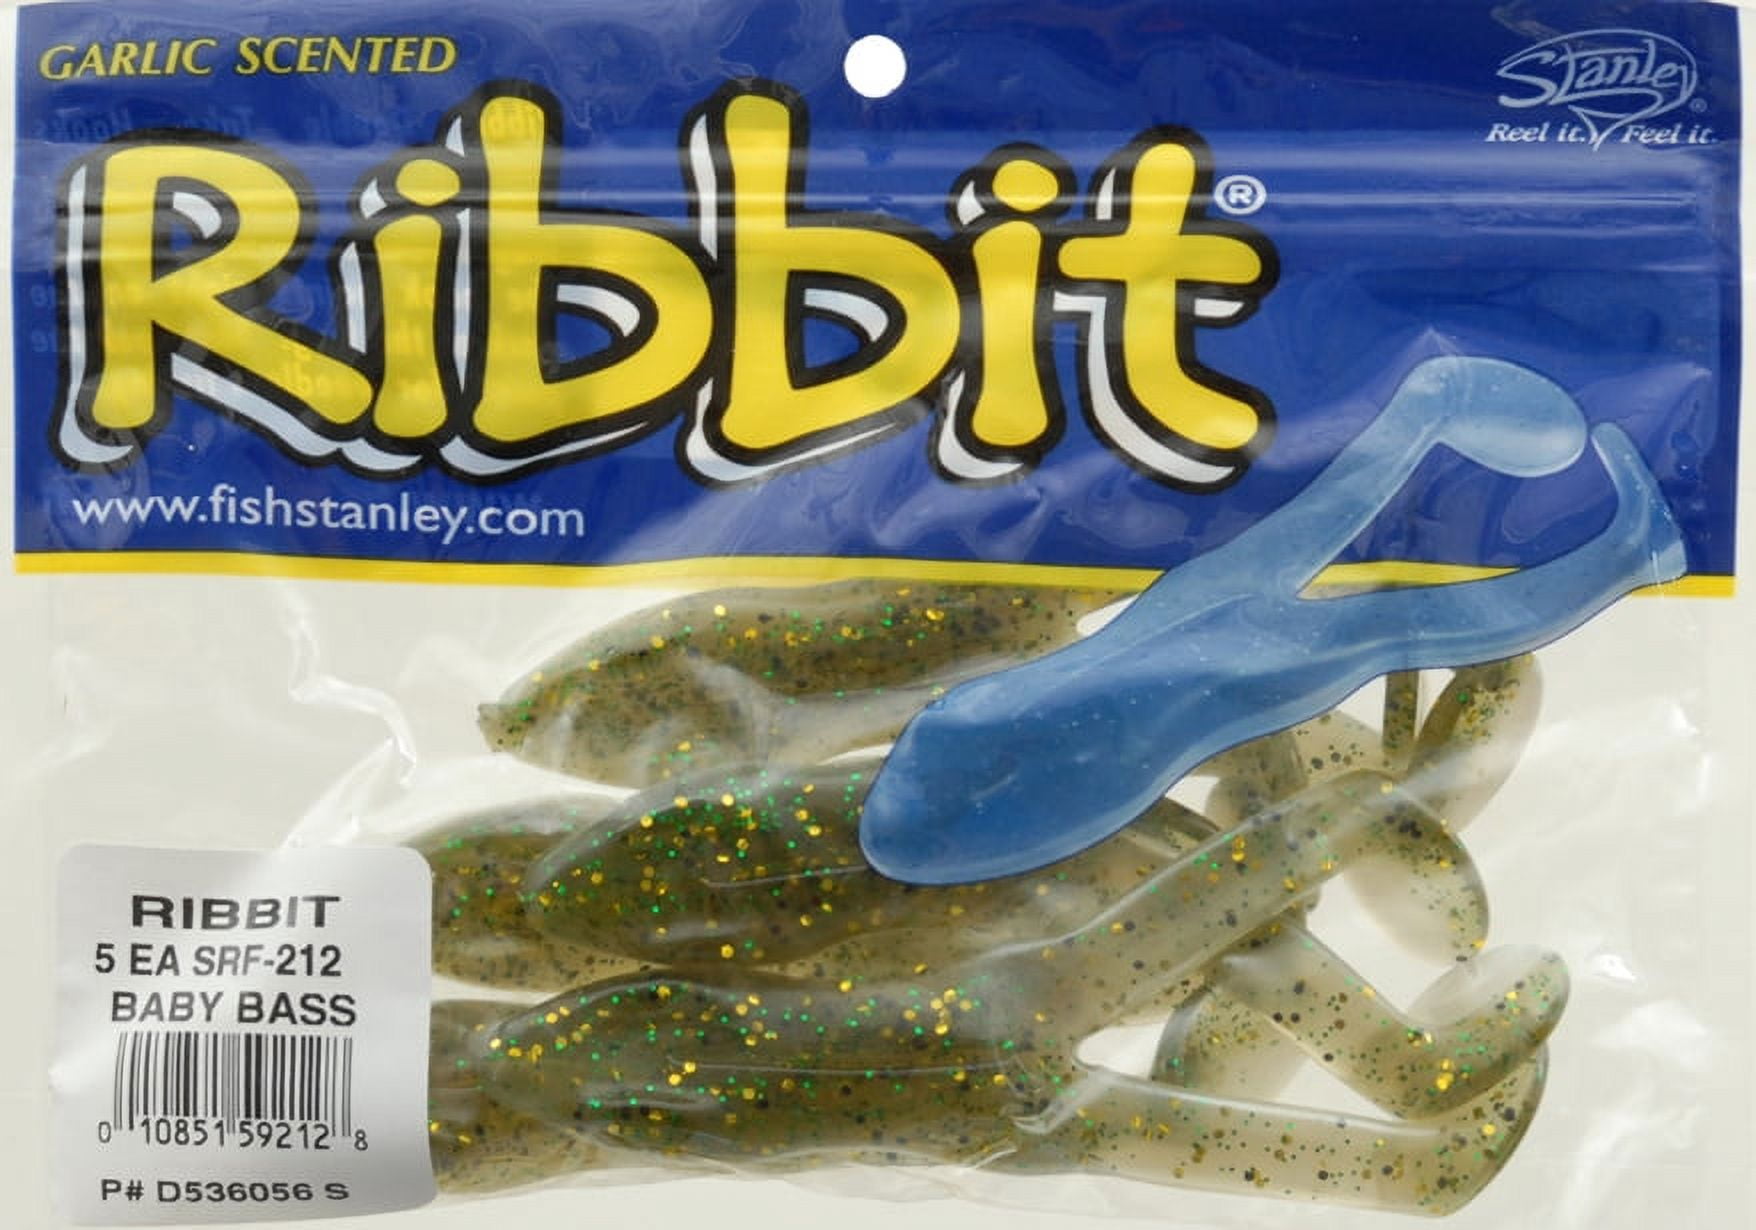 Stanley 4 Ribbit Rubber Frog Softbait, Baby Bass, 5 pack 